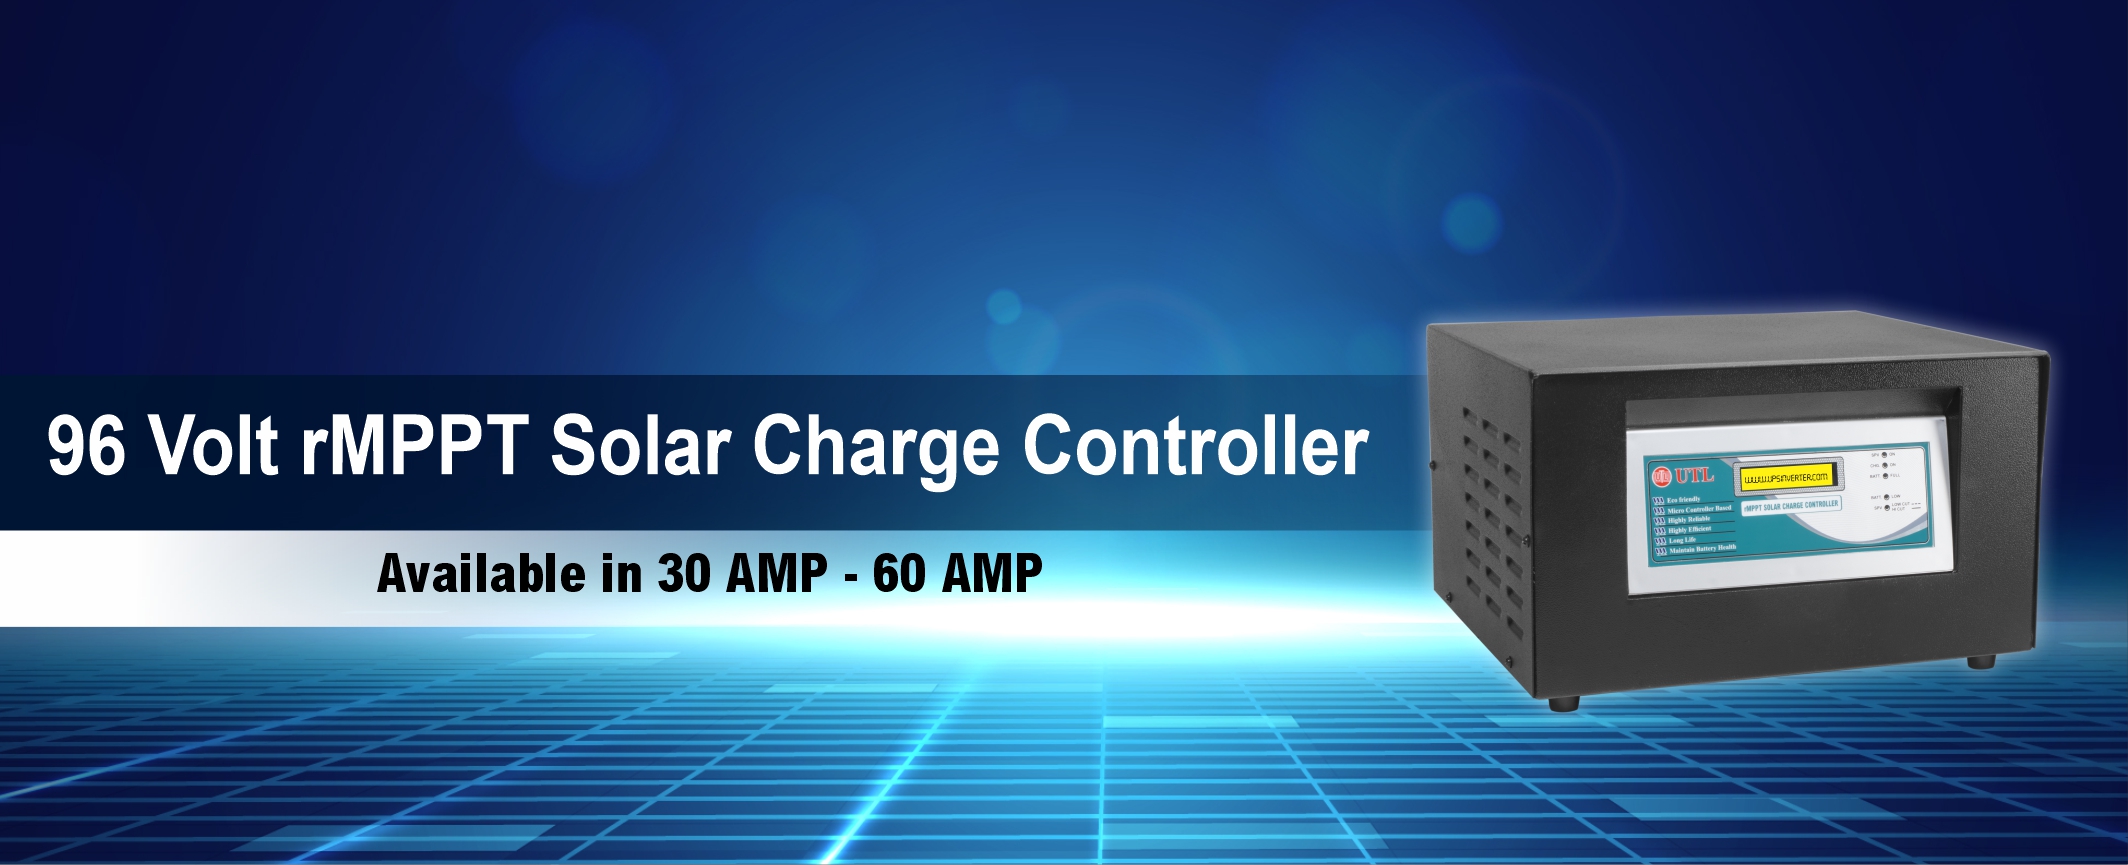 96 volt solar charge controller